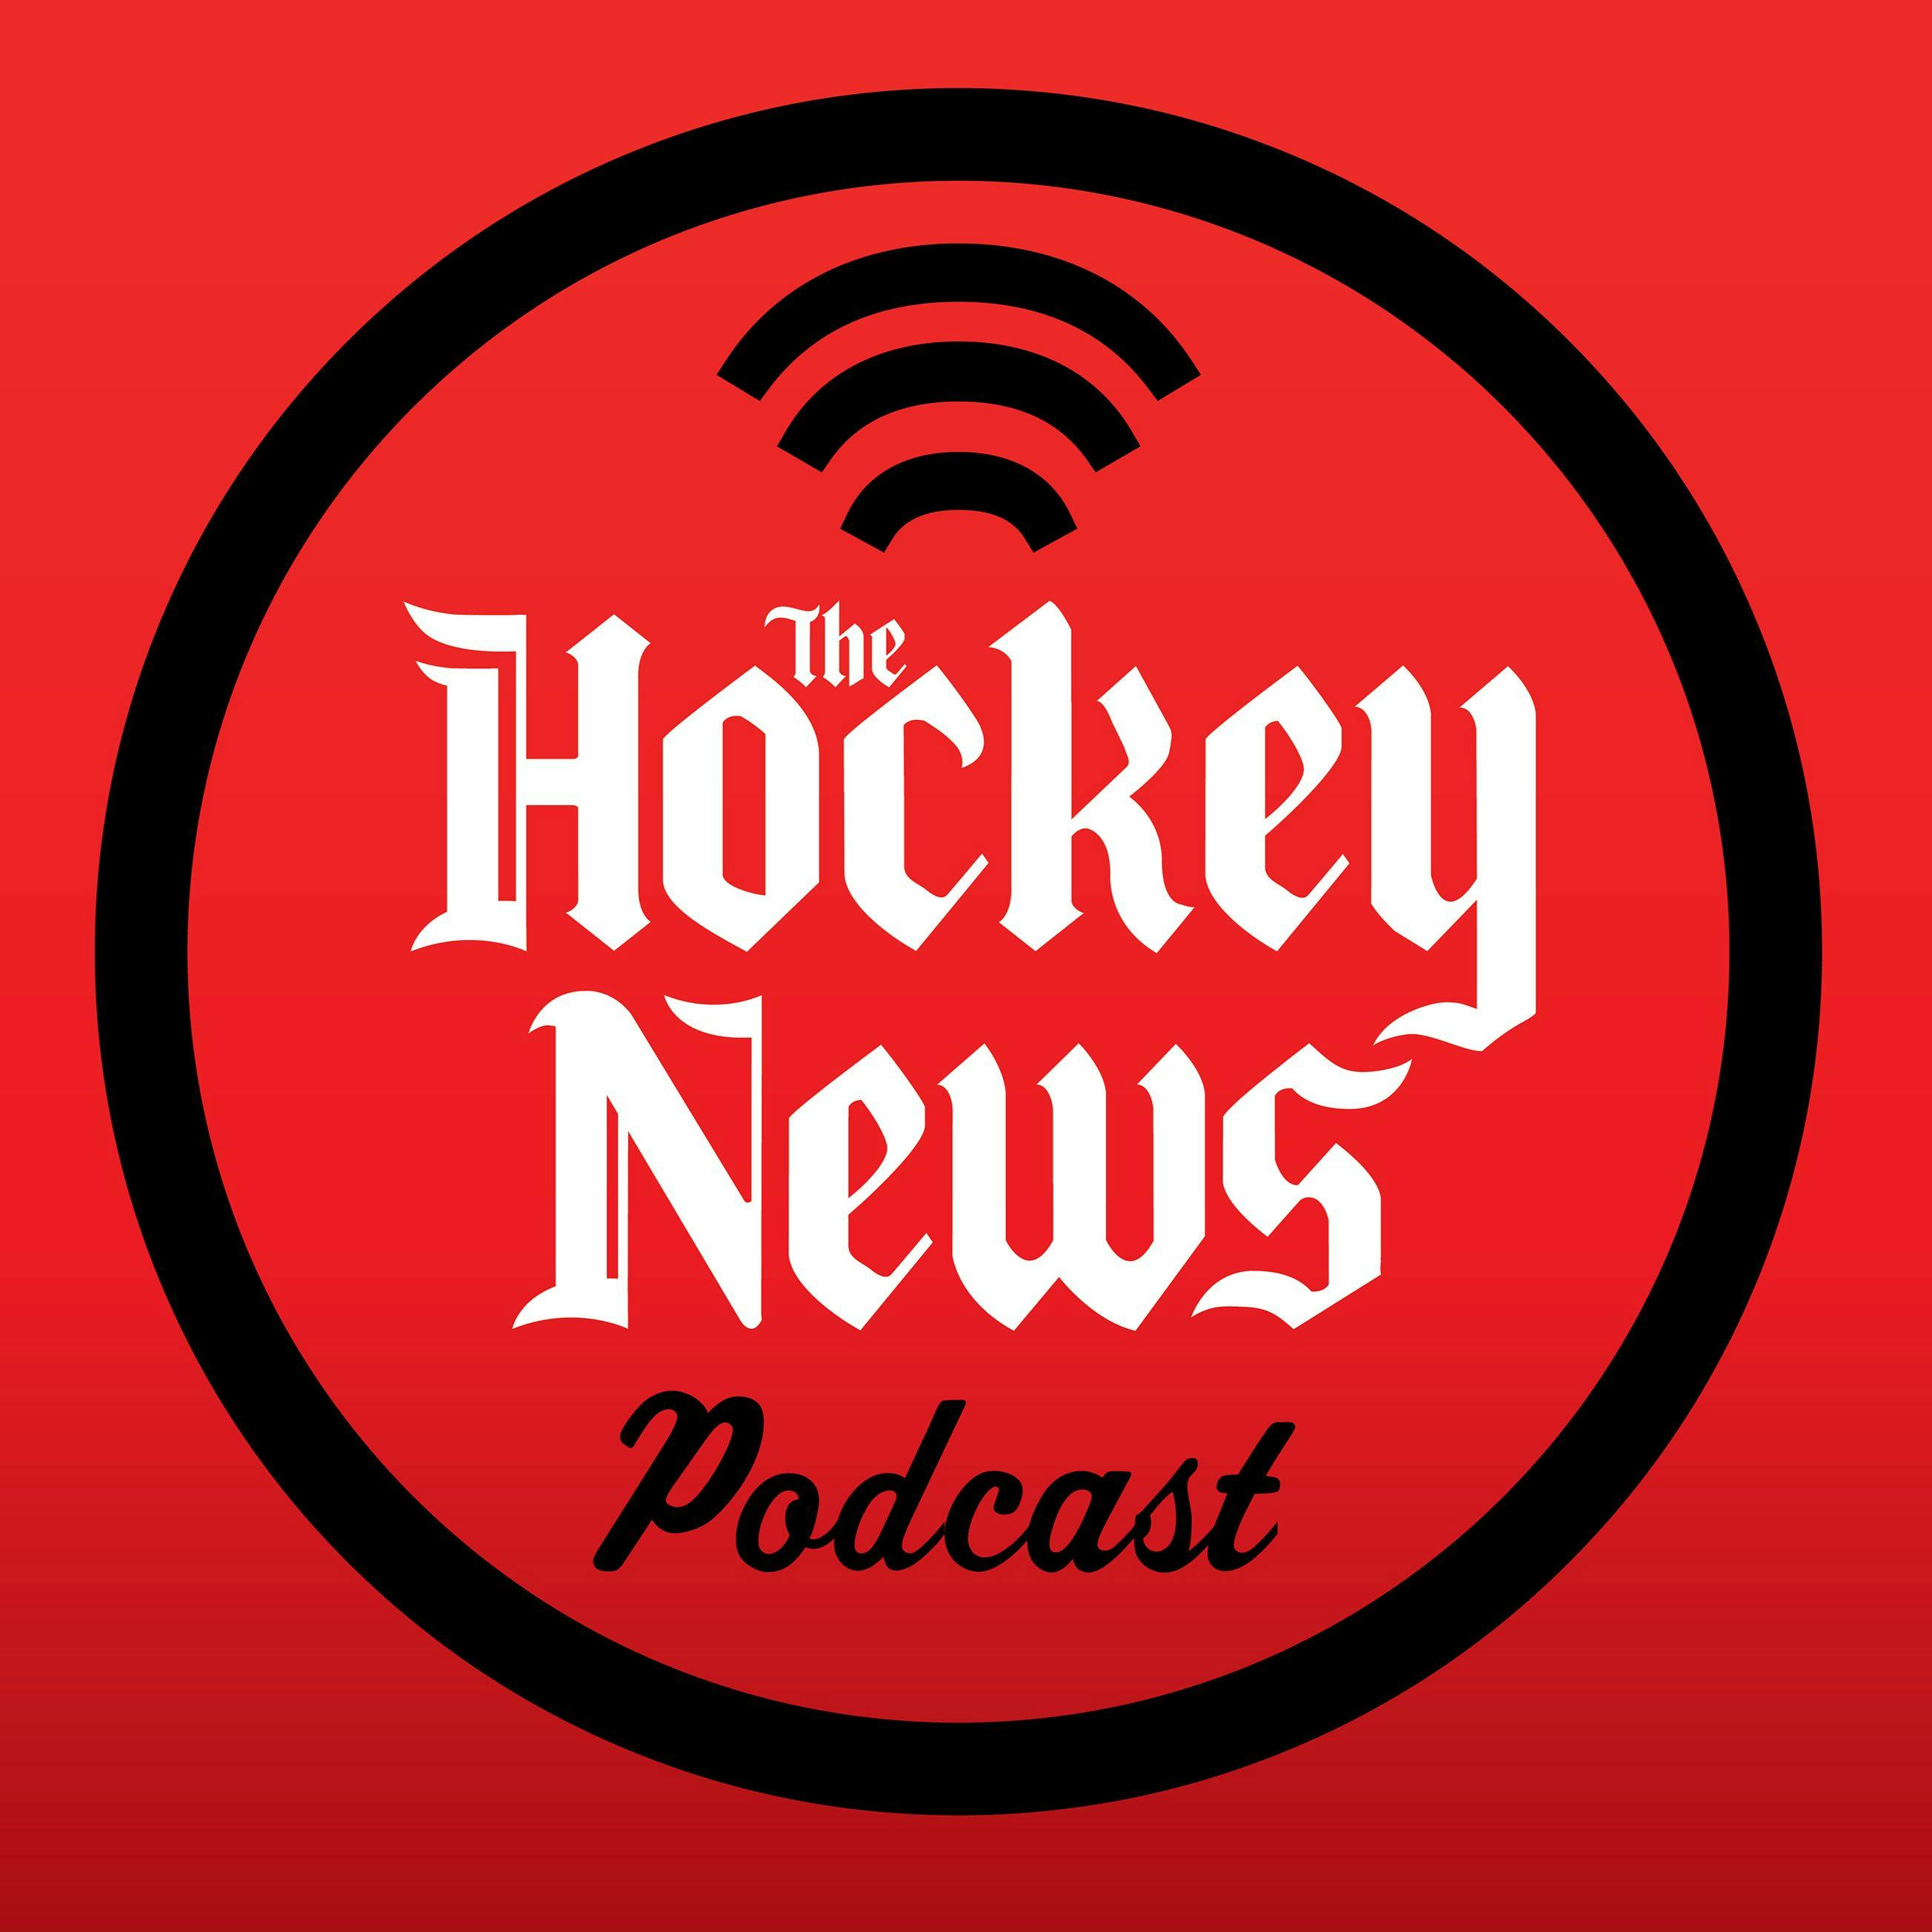 The Hockey News Podcast: How Legitimate are the Minnesota Wild?